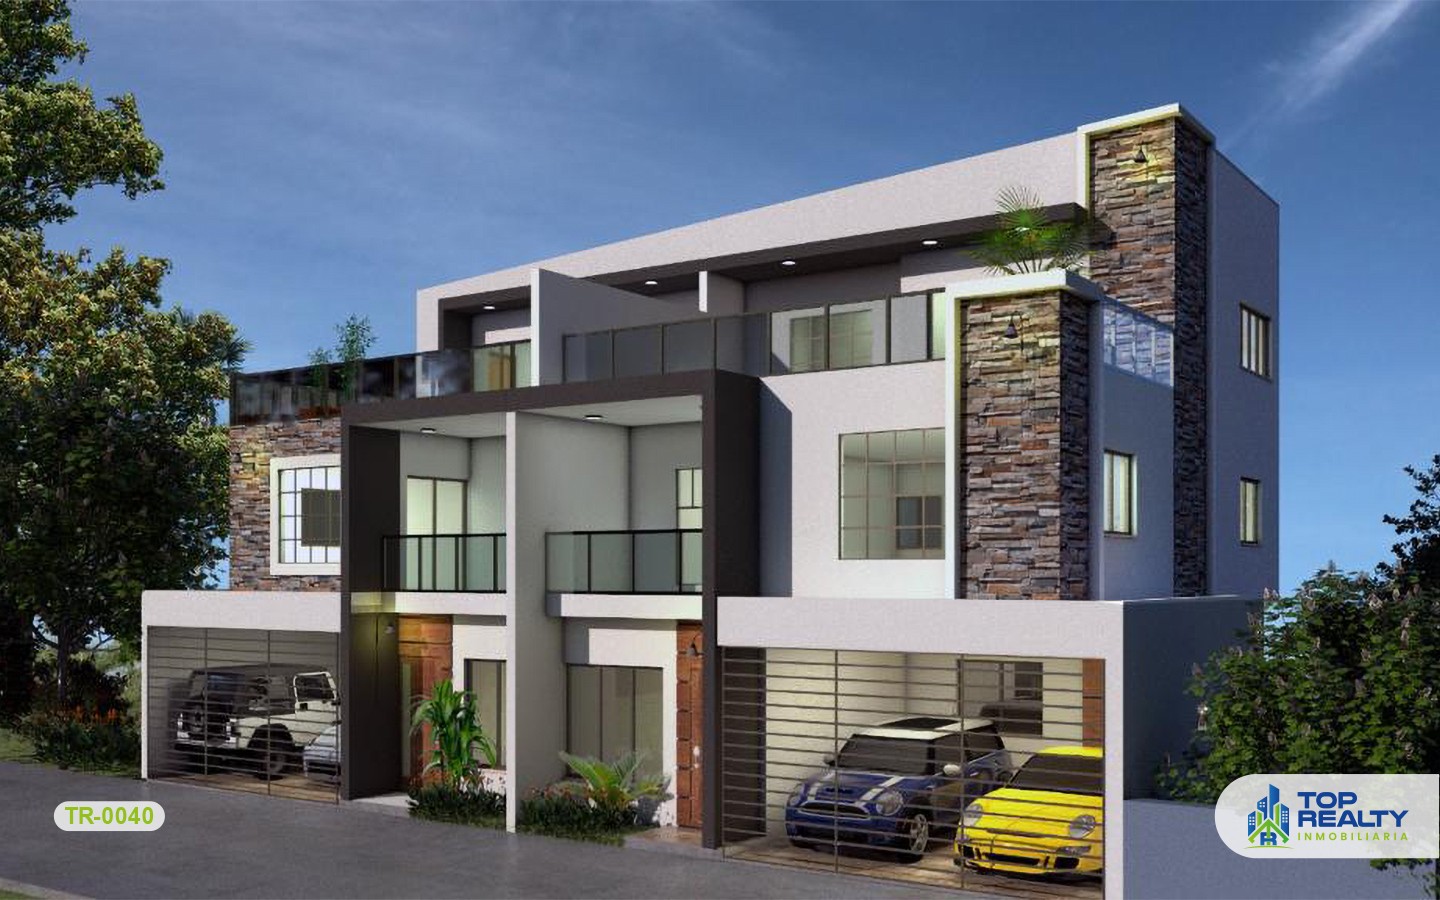 apartamentos - TR-0040: ¡Proyecto único! Casas en tres niveles con distribución excelente. 2